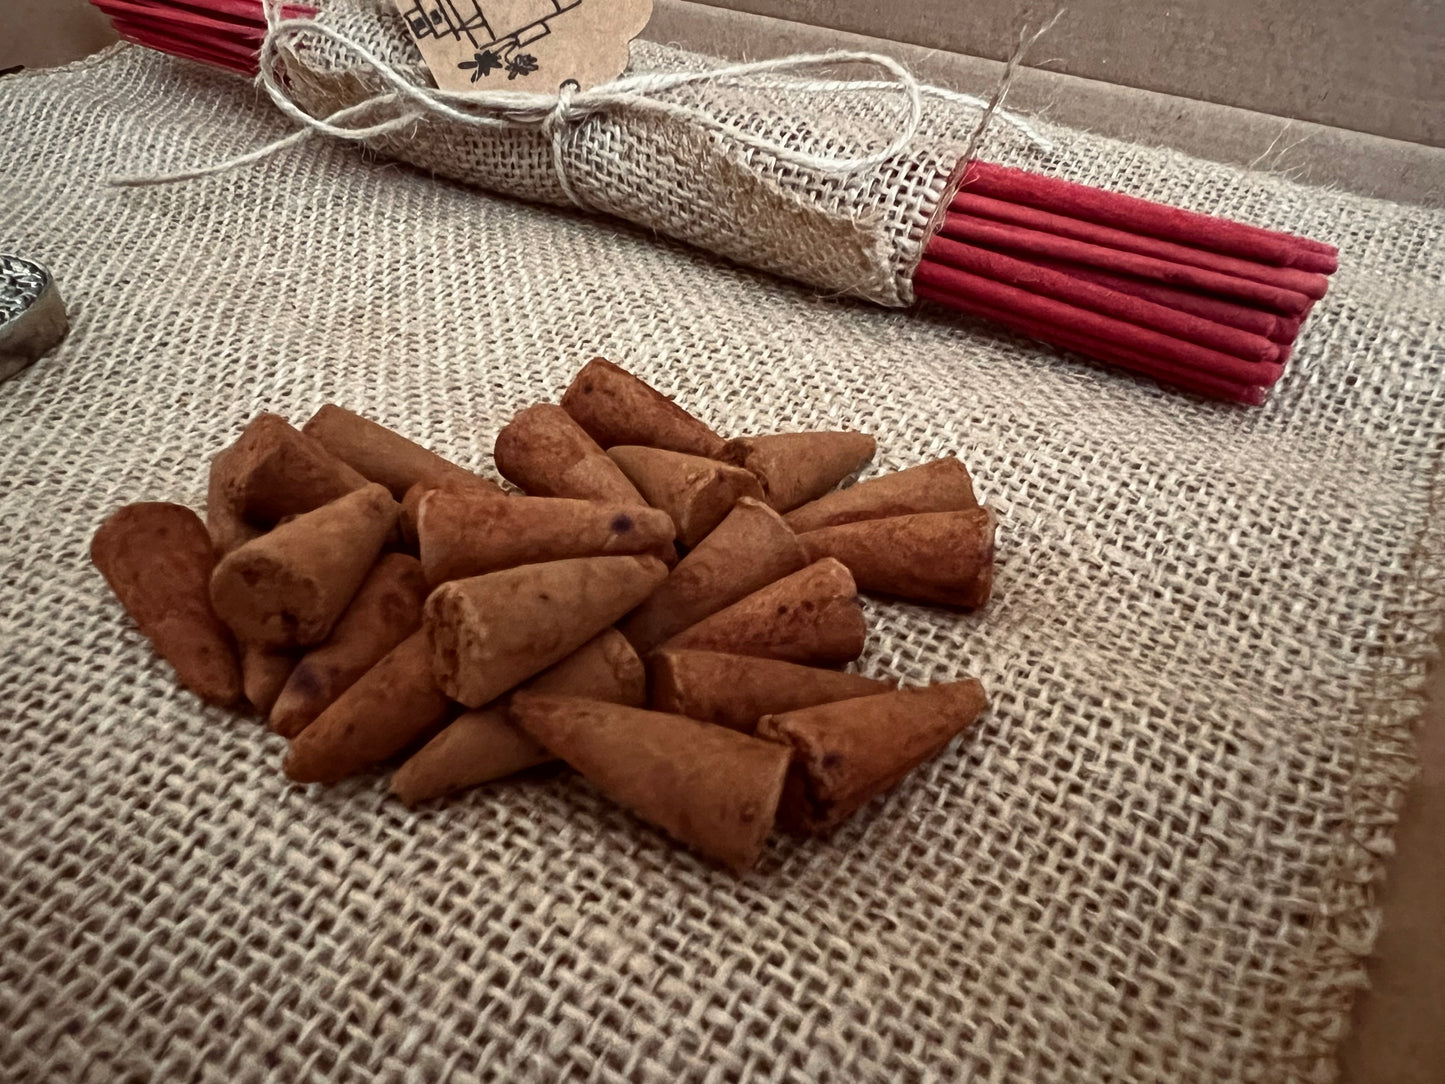 Sandalwood incense cones